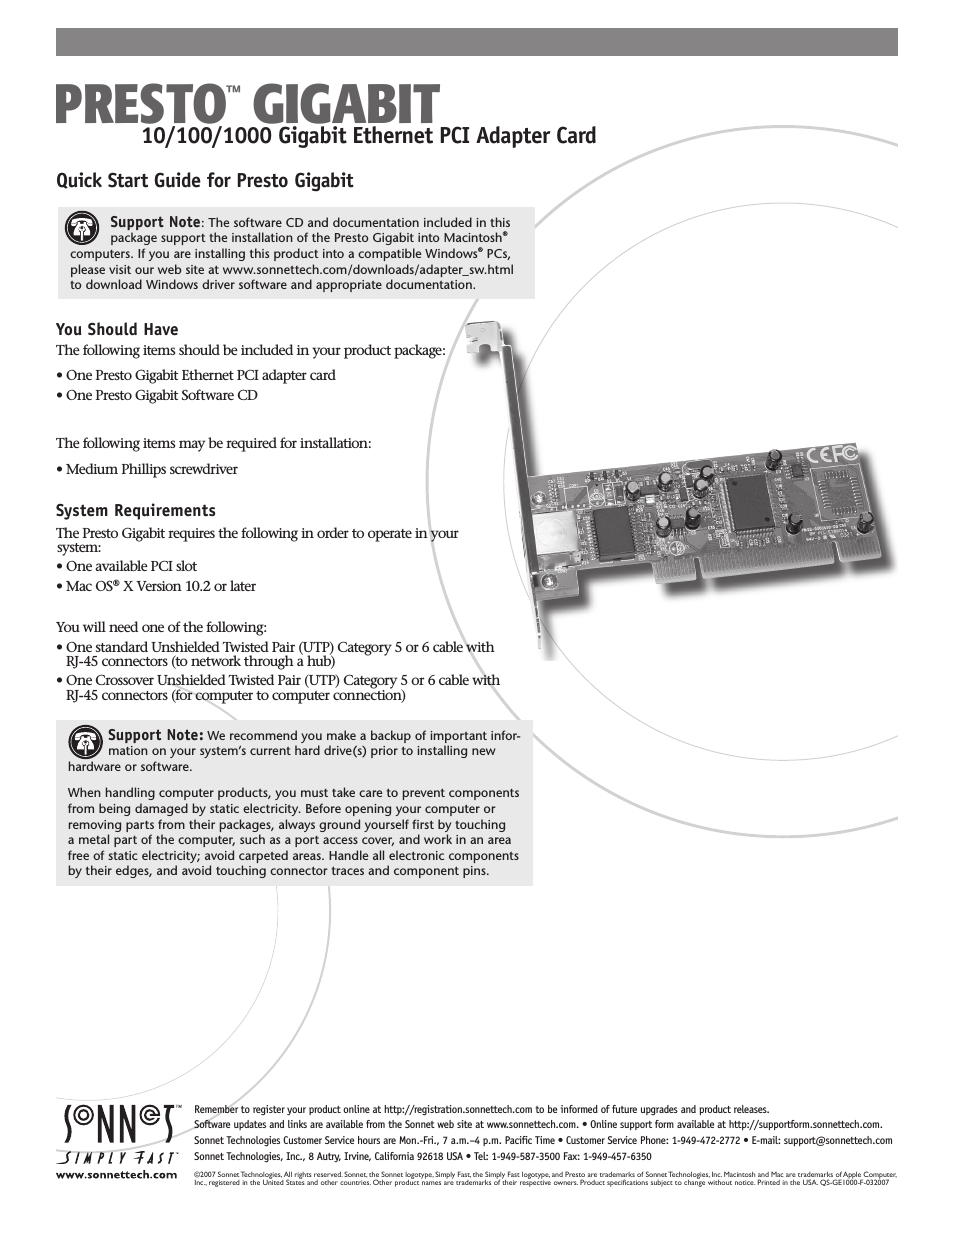 Presto Gigabit PCI Adapter Card